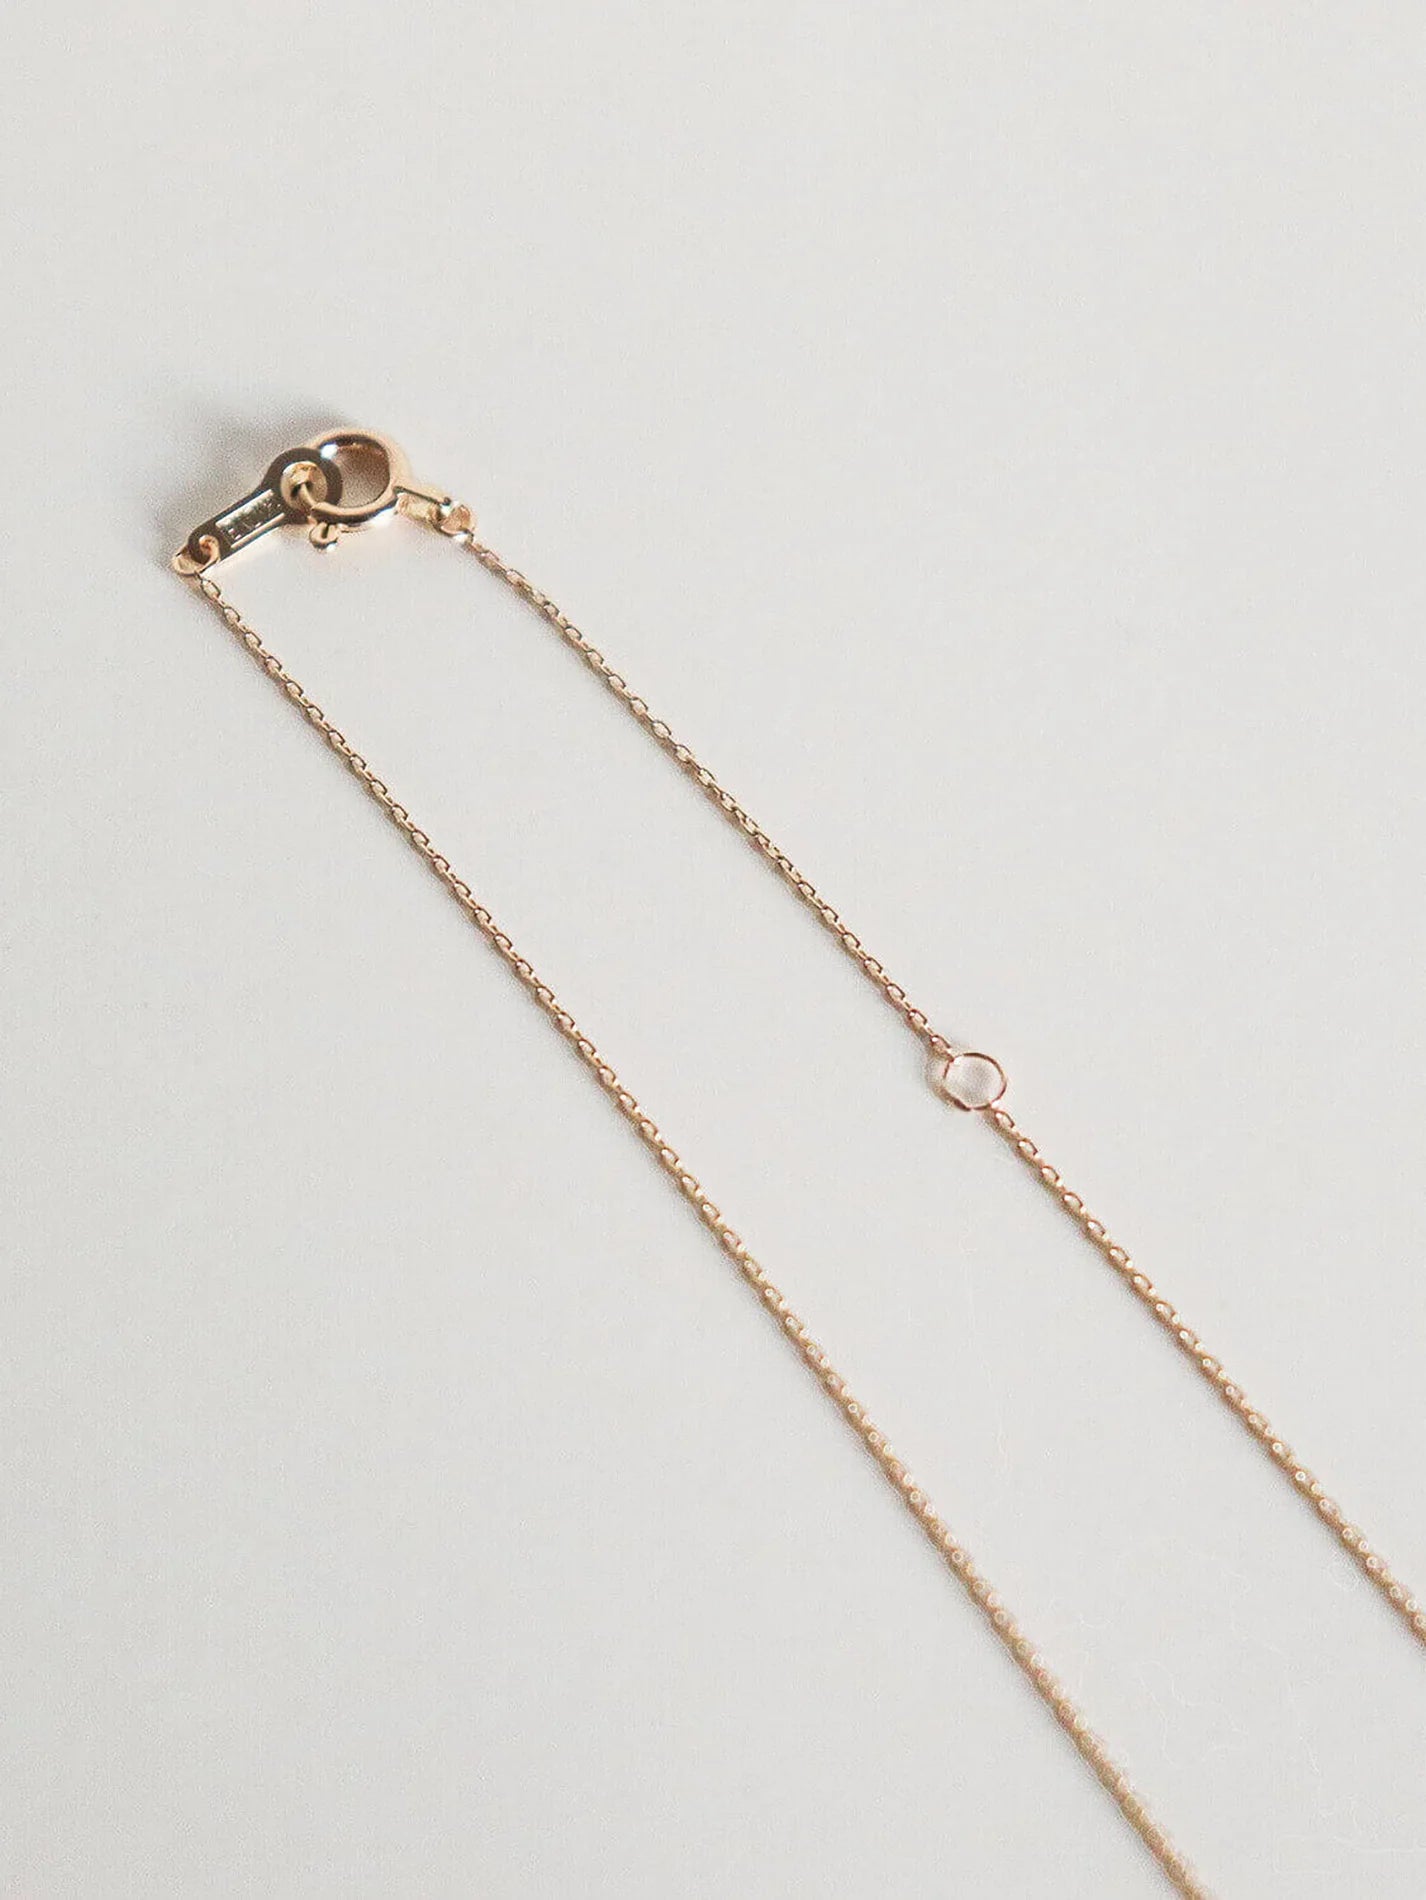 Tiny Amethyst Necklace